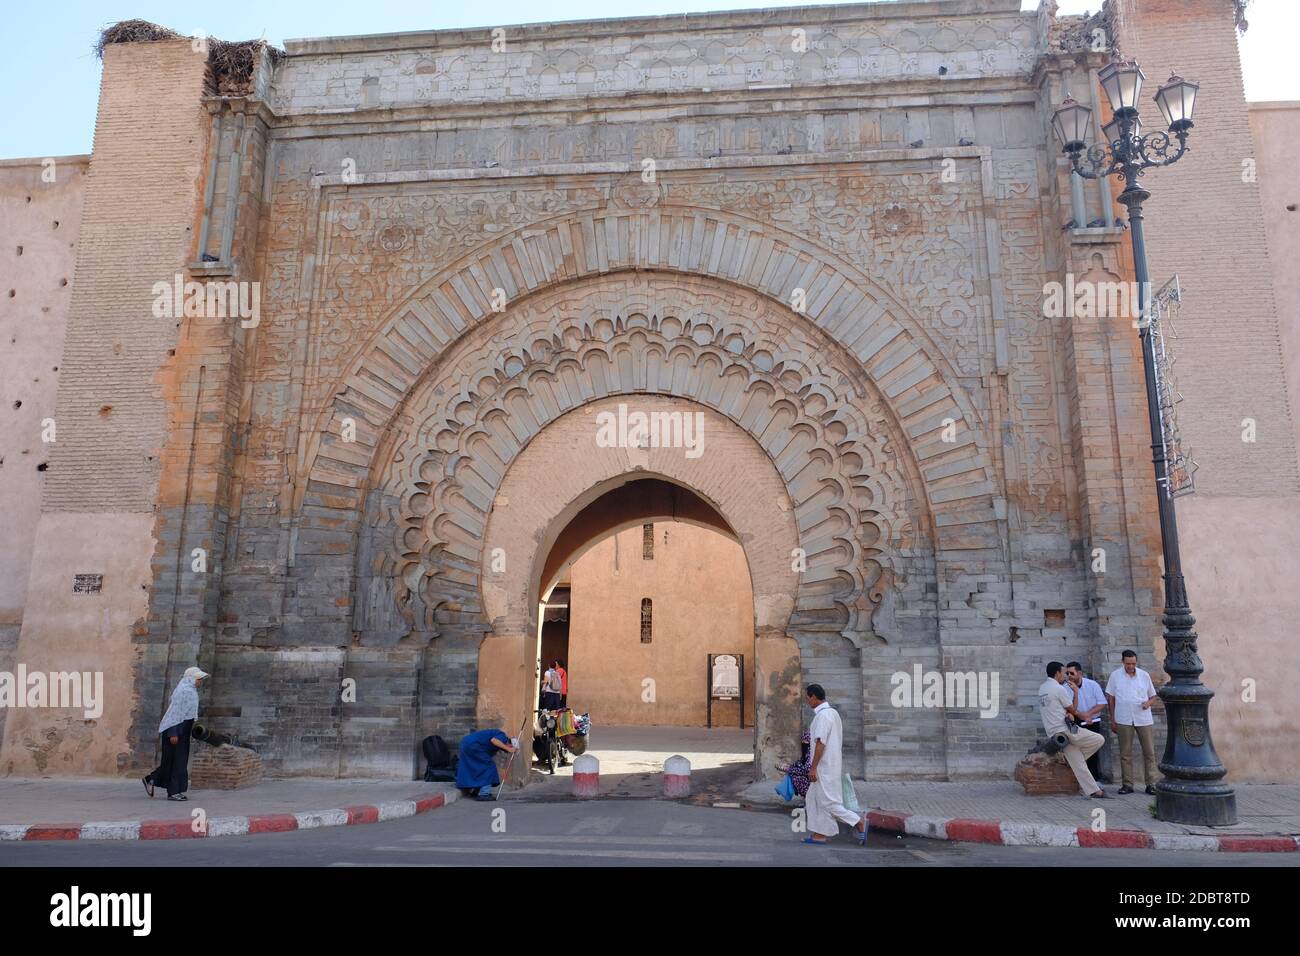 Morocco Marrakesh - Old Medina city gate Stock Photo